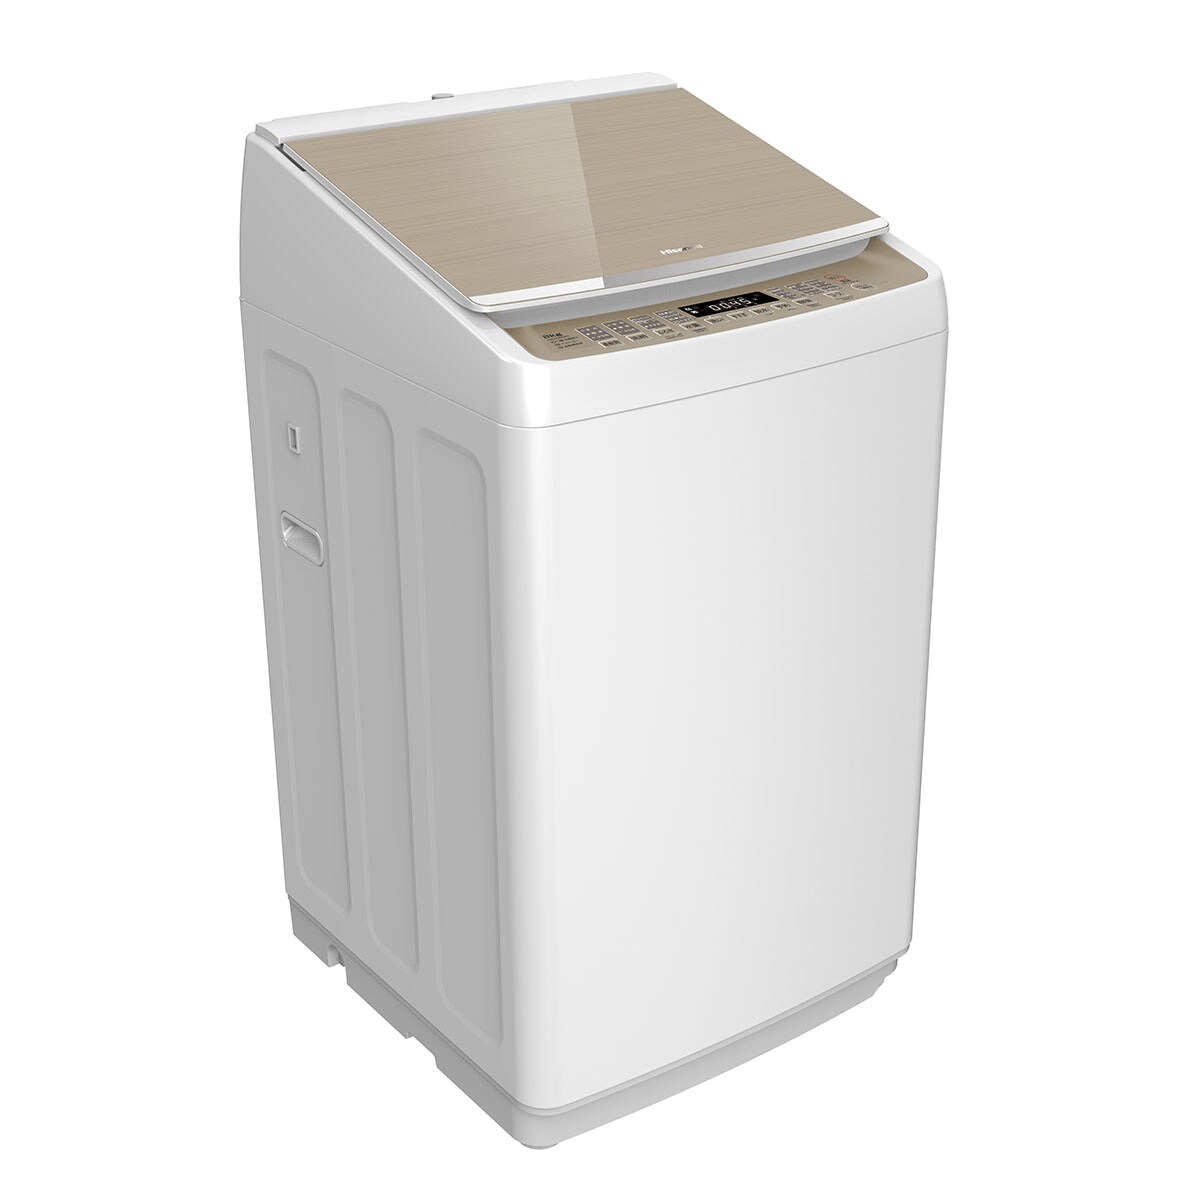 8kg WI-FI対応洗剤自動投入洗濯機(HW-DGXH オフホワイト)延長保証付き 